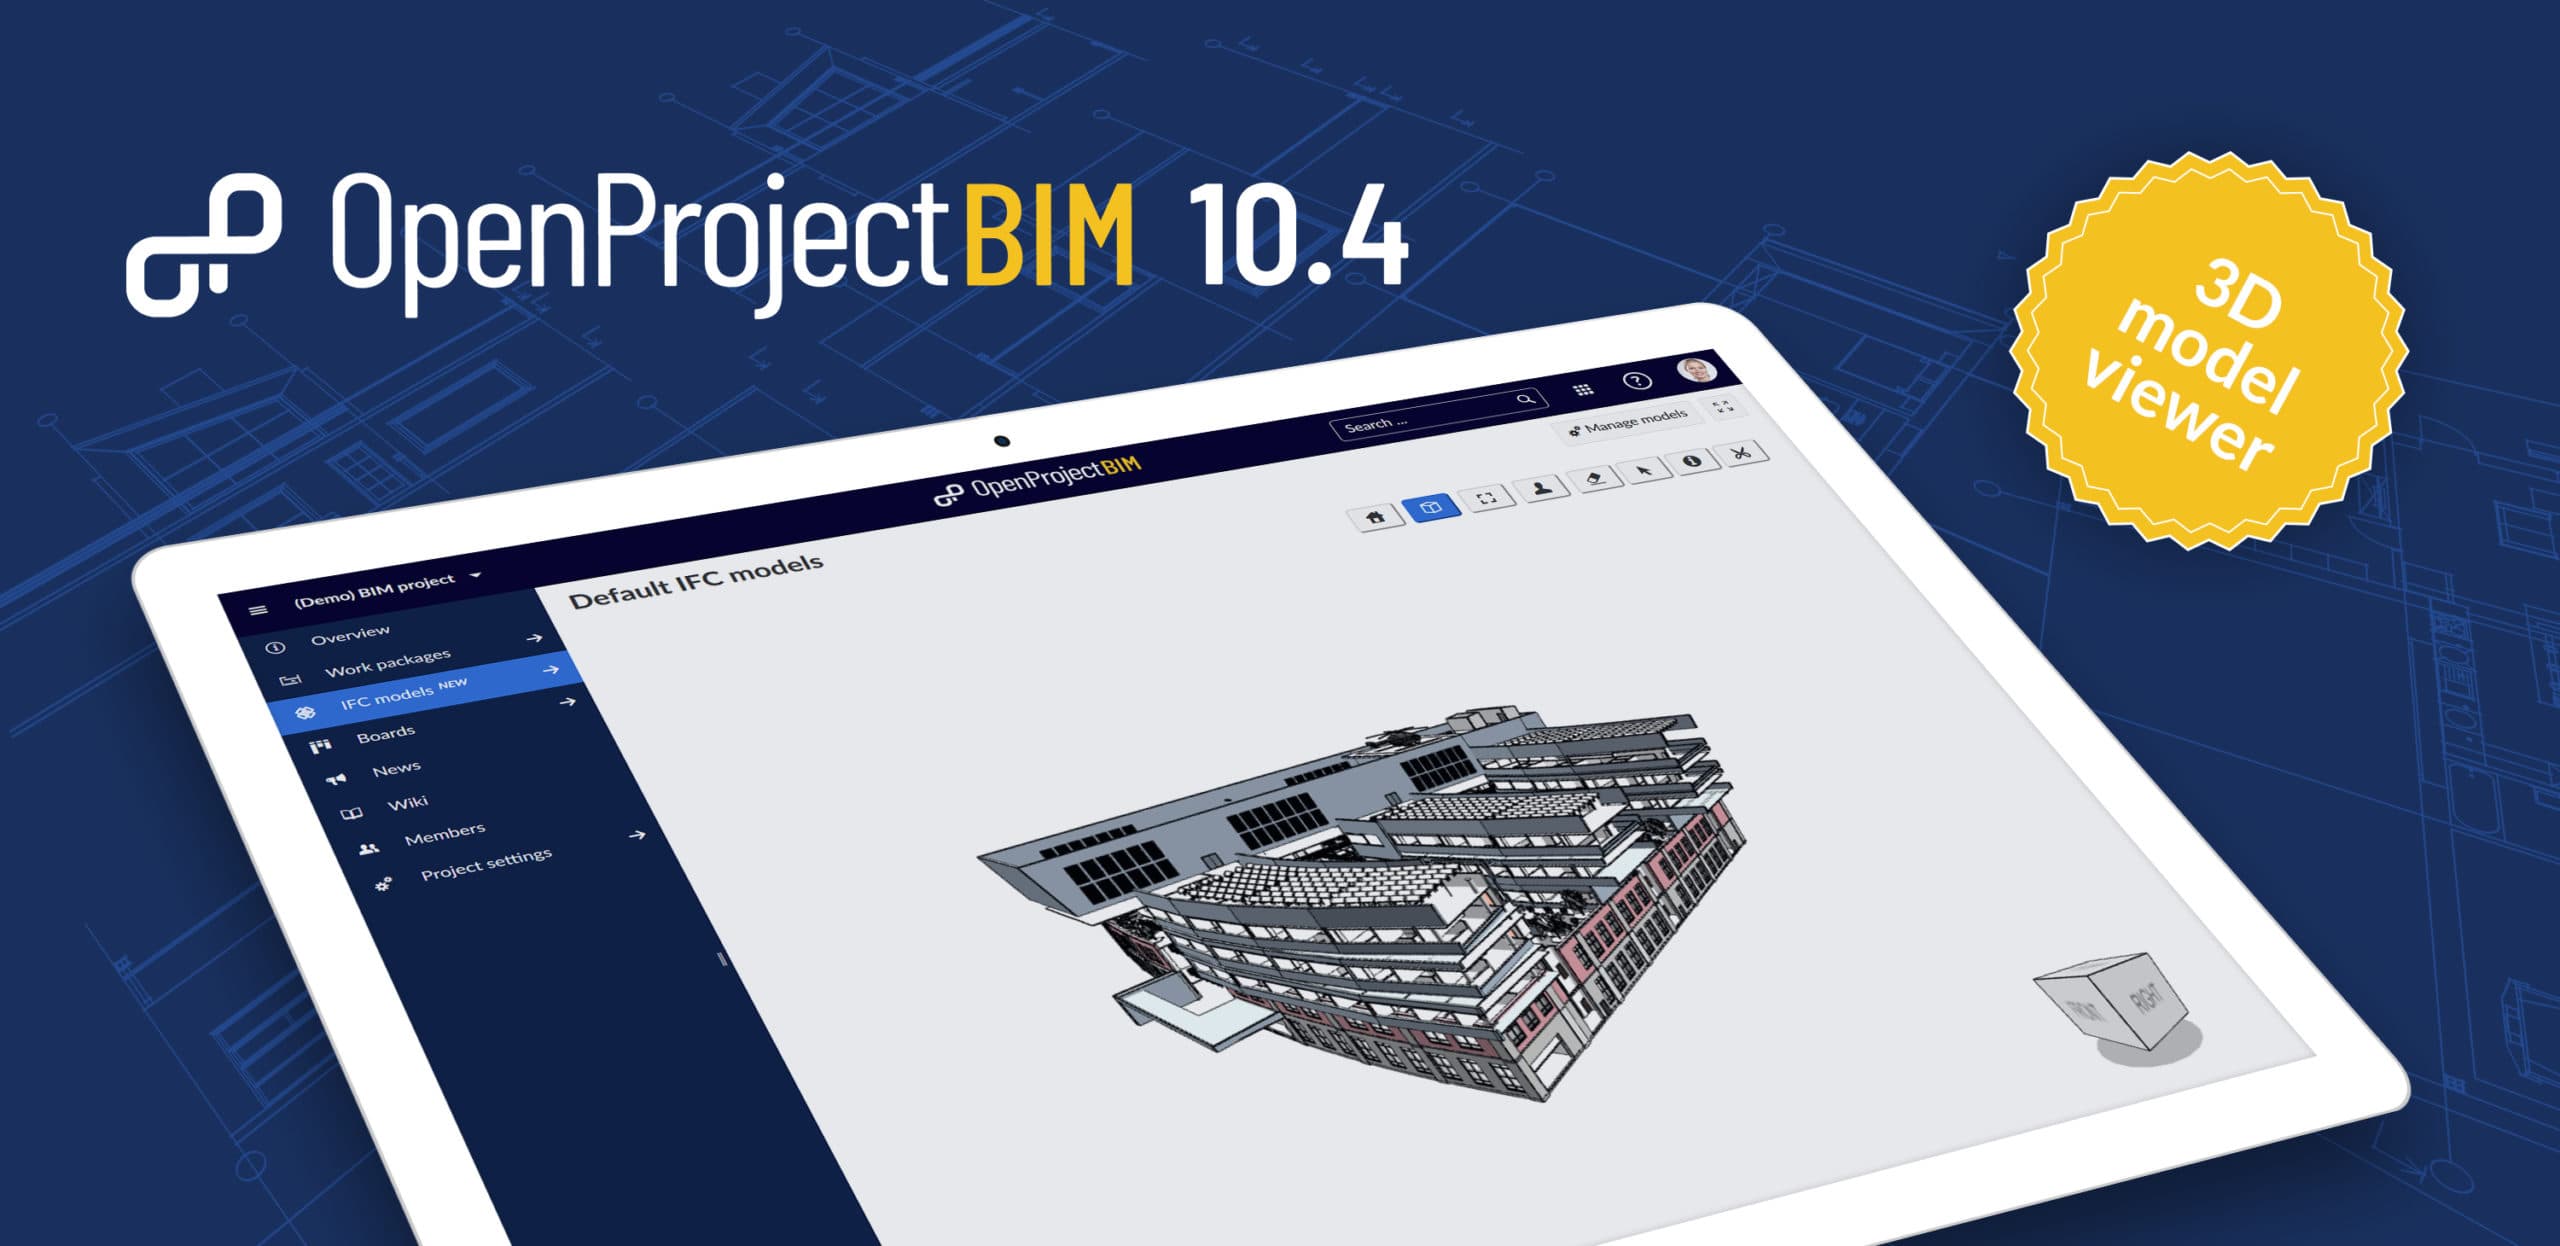 OpenProject BIM 10.4: digitales Bauprojektmanagement mit 3D-Viewer (IFC)